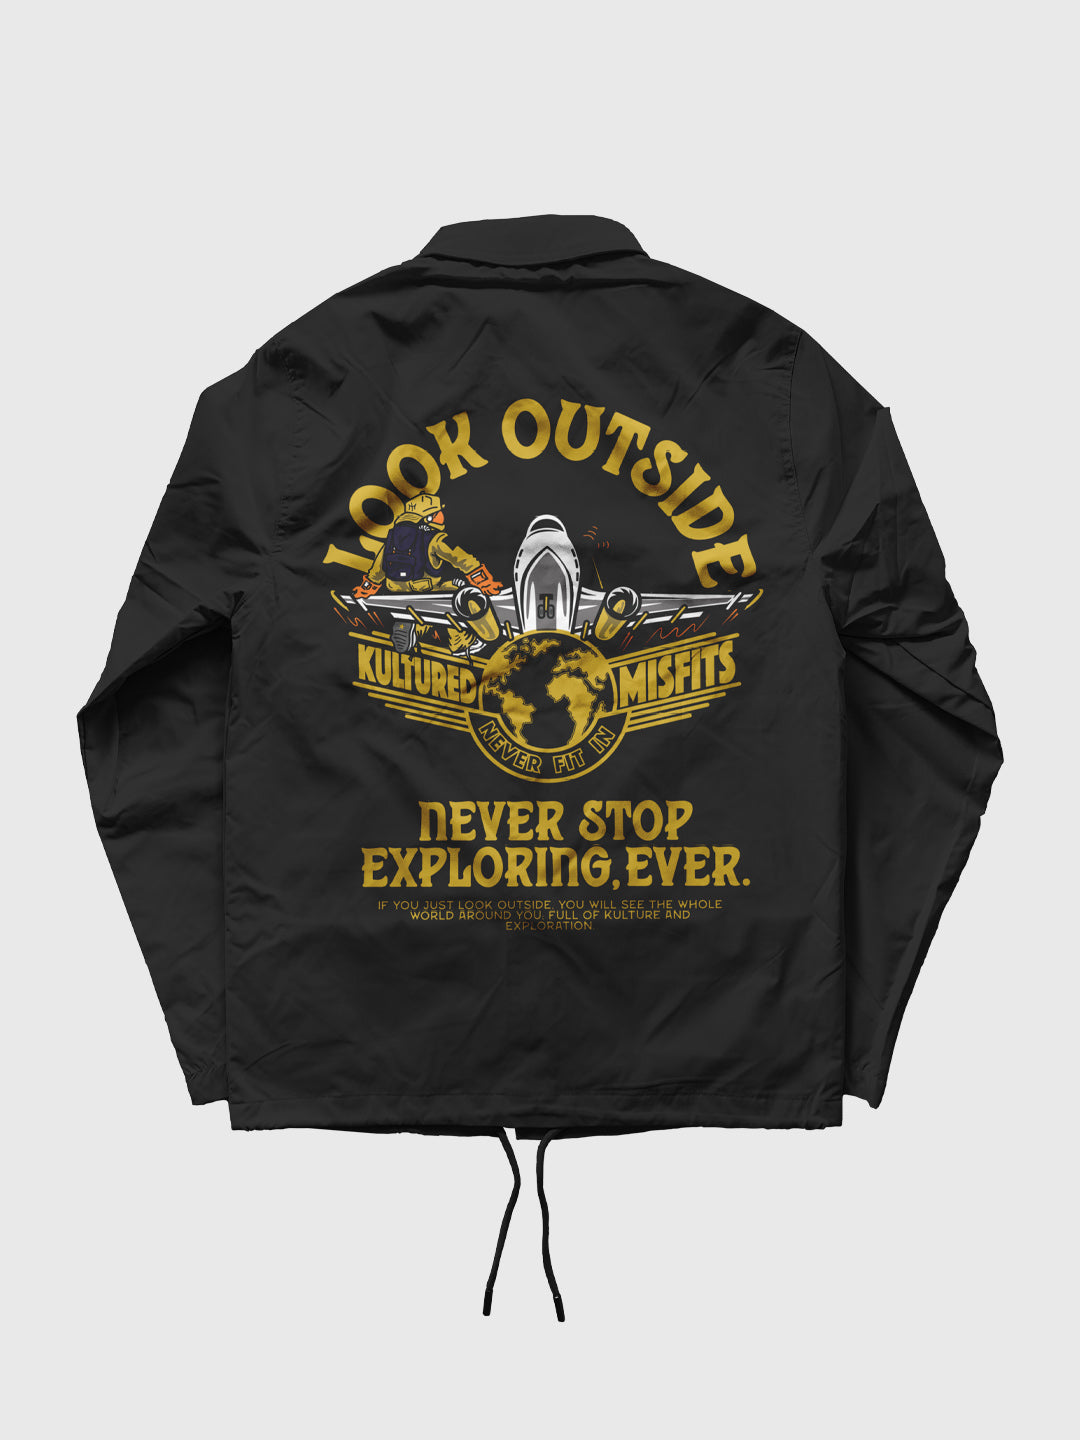 Kultured Misfits "Look Outside" Coaches Jacket